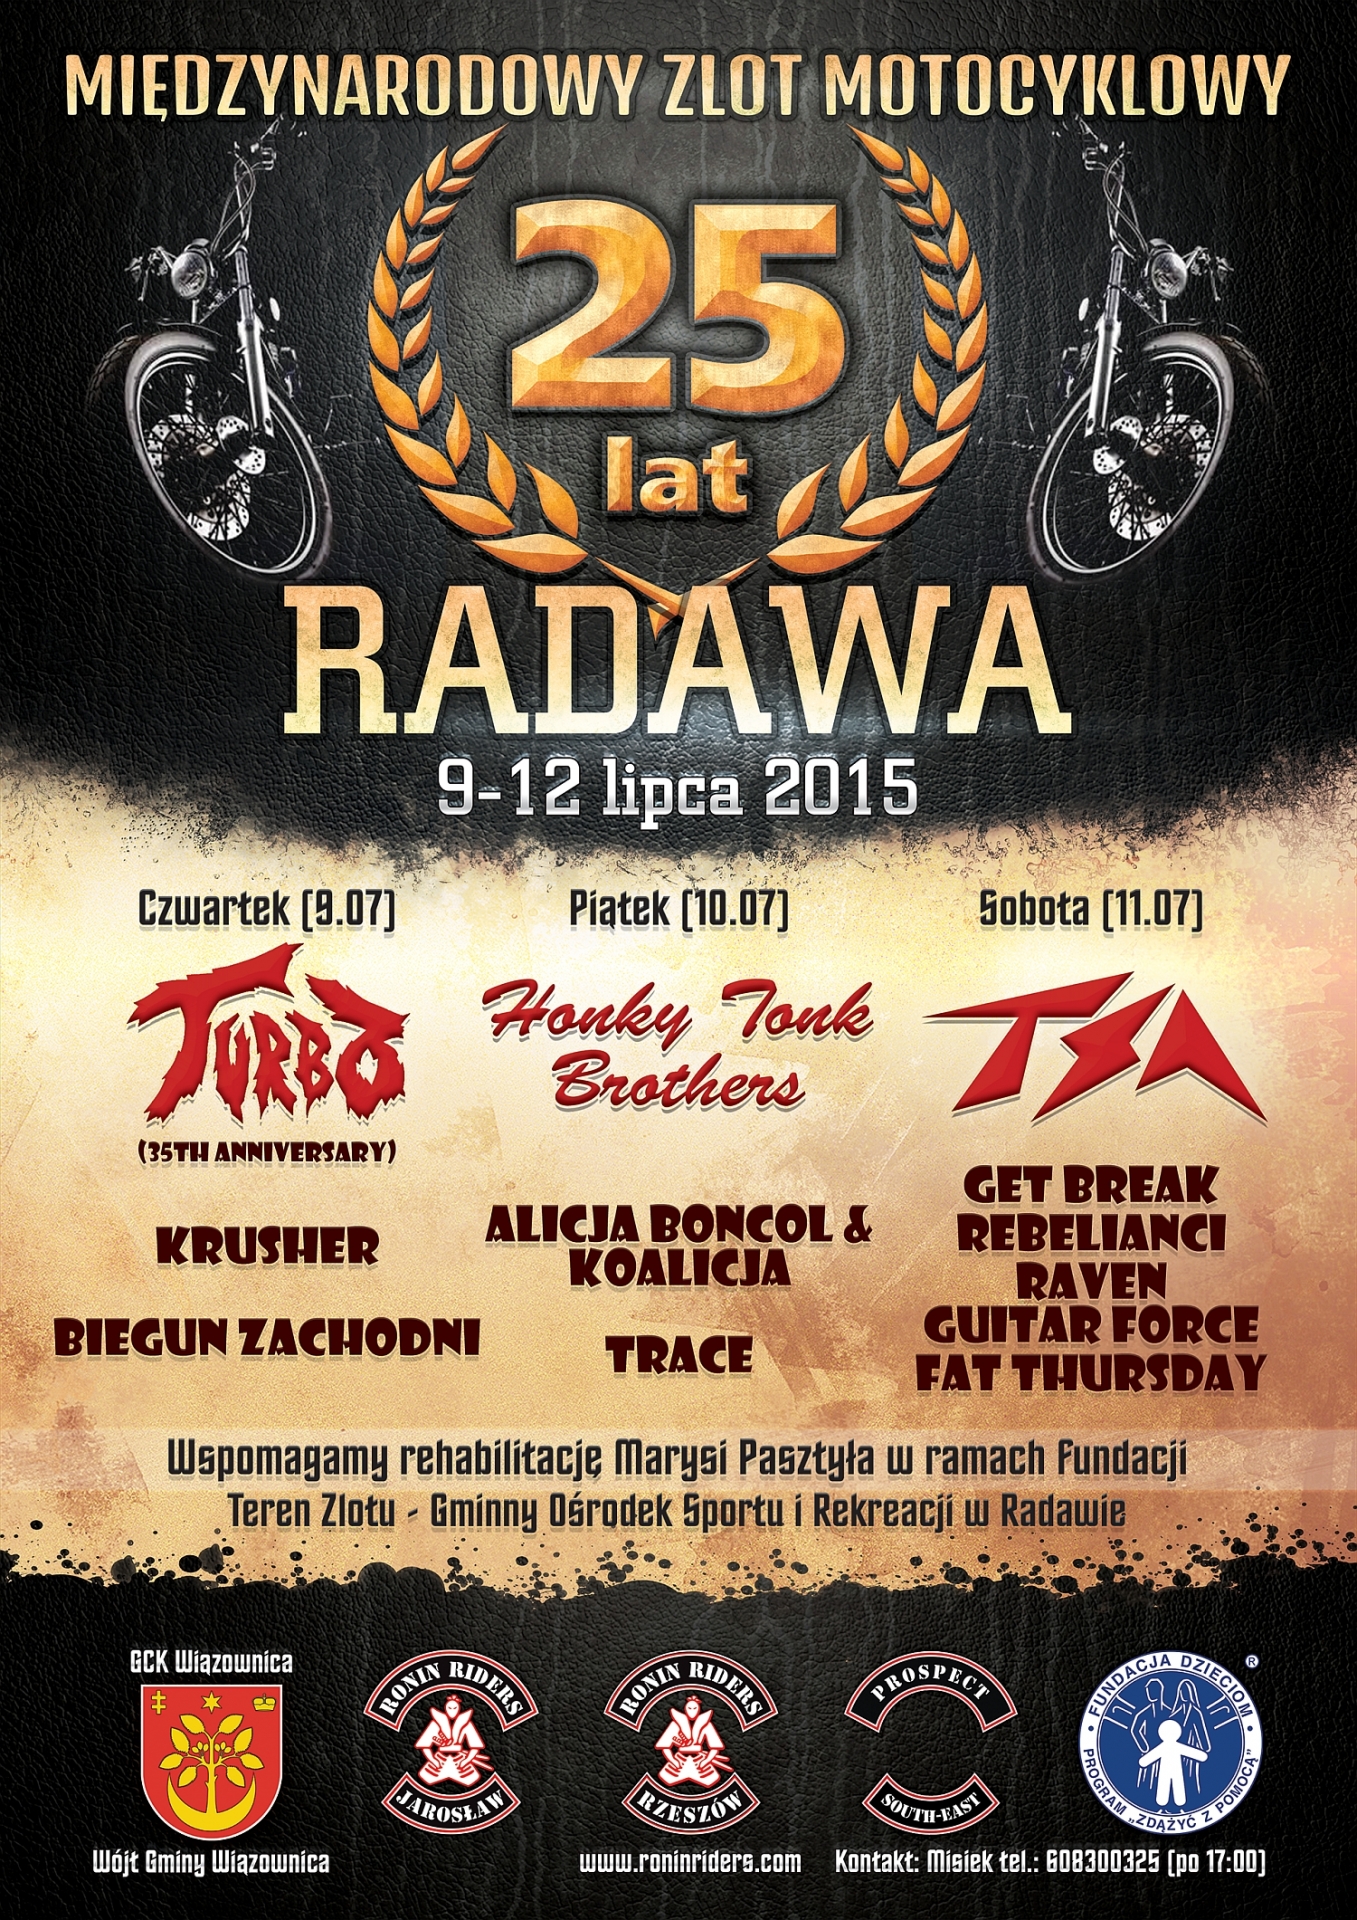 Radawa Motorcycle Rally 2015 - A3 poster